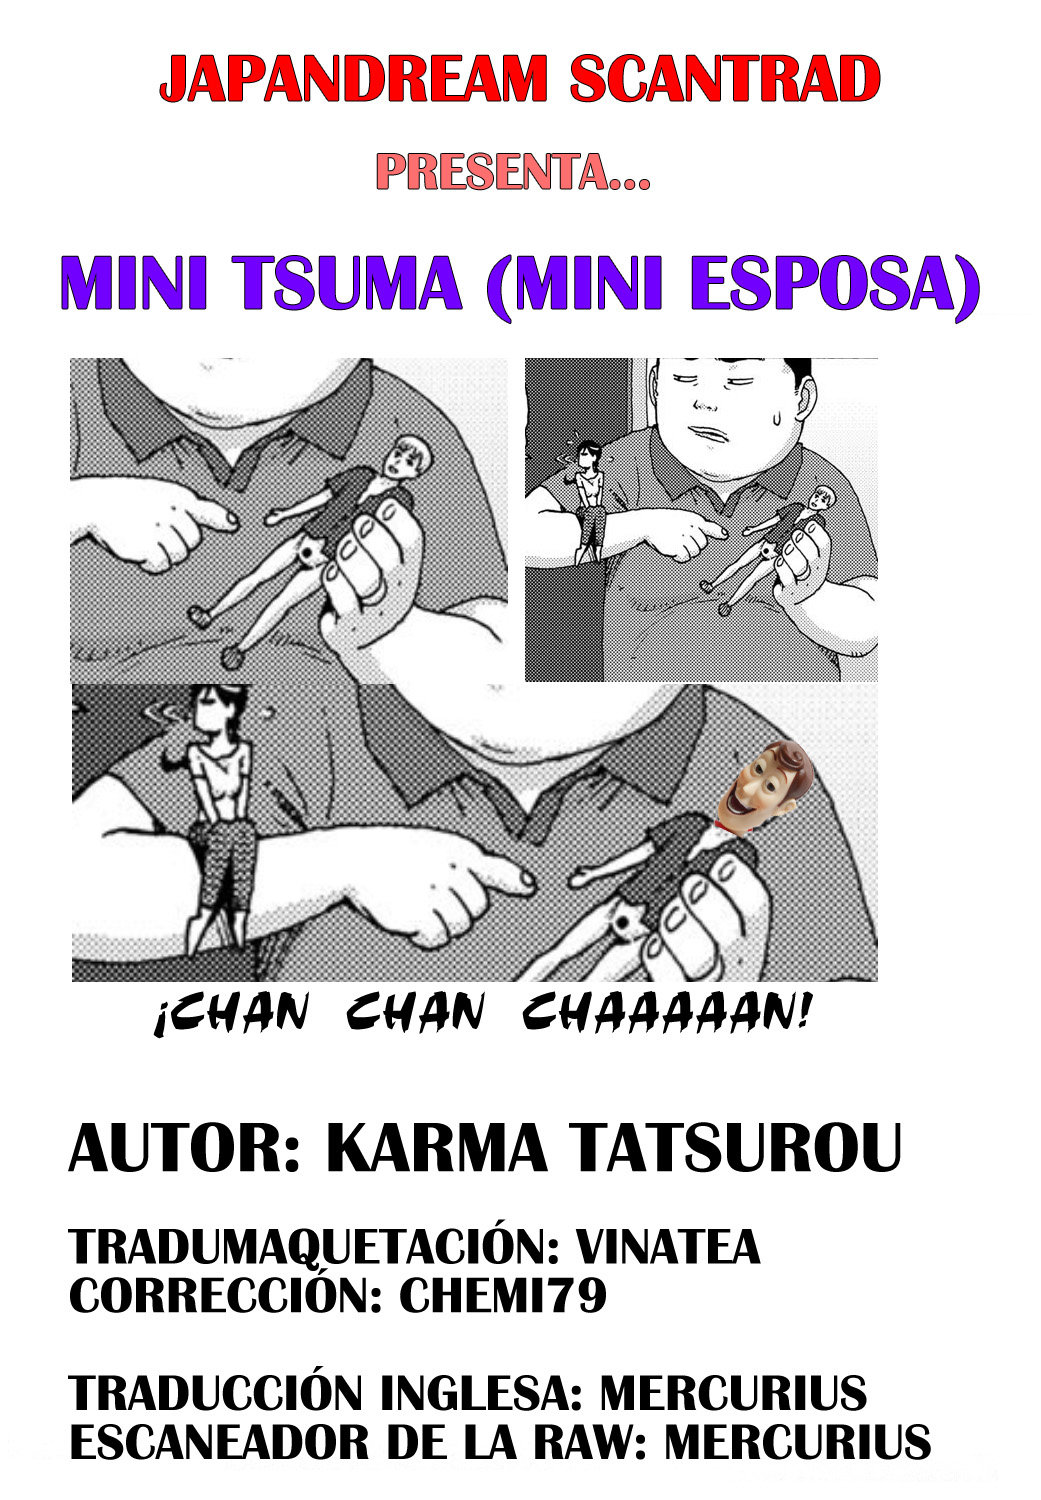 Mini Tsuma - Karma Tatsurou - 8